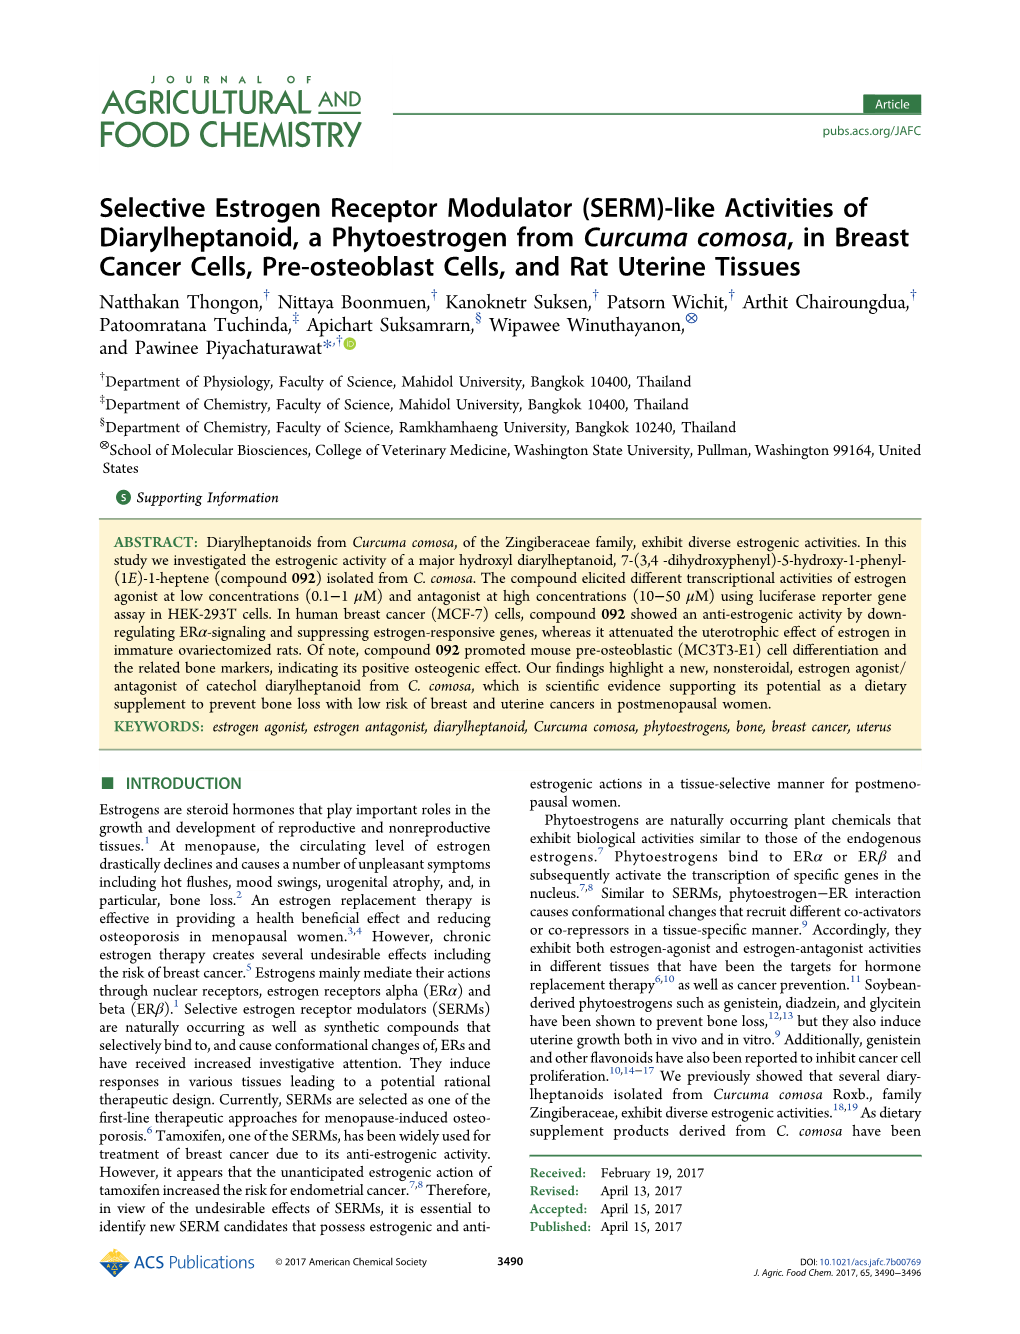 Selective Estrogen Receptor Modulator (SERM)-Like Activities of Diarylheptanoid, a Phytoestrogen from Curcuma Comosa, in Breast